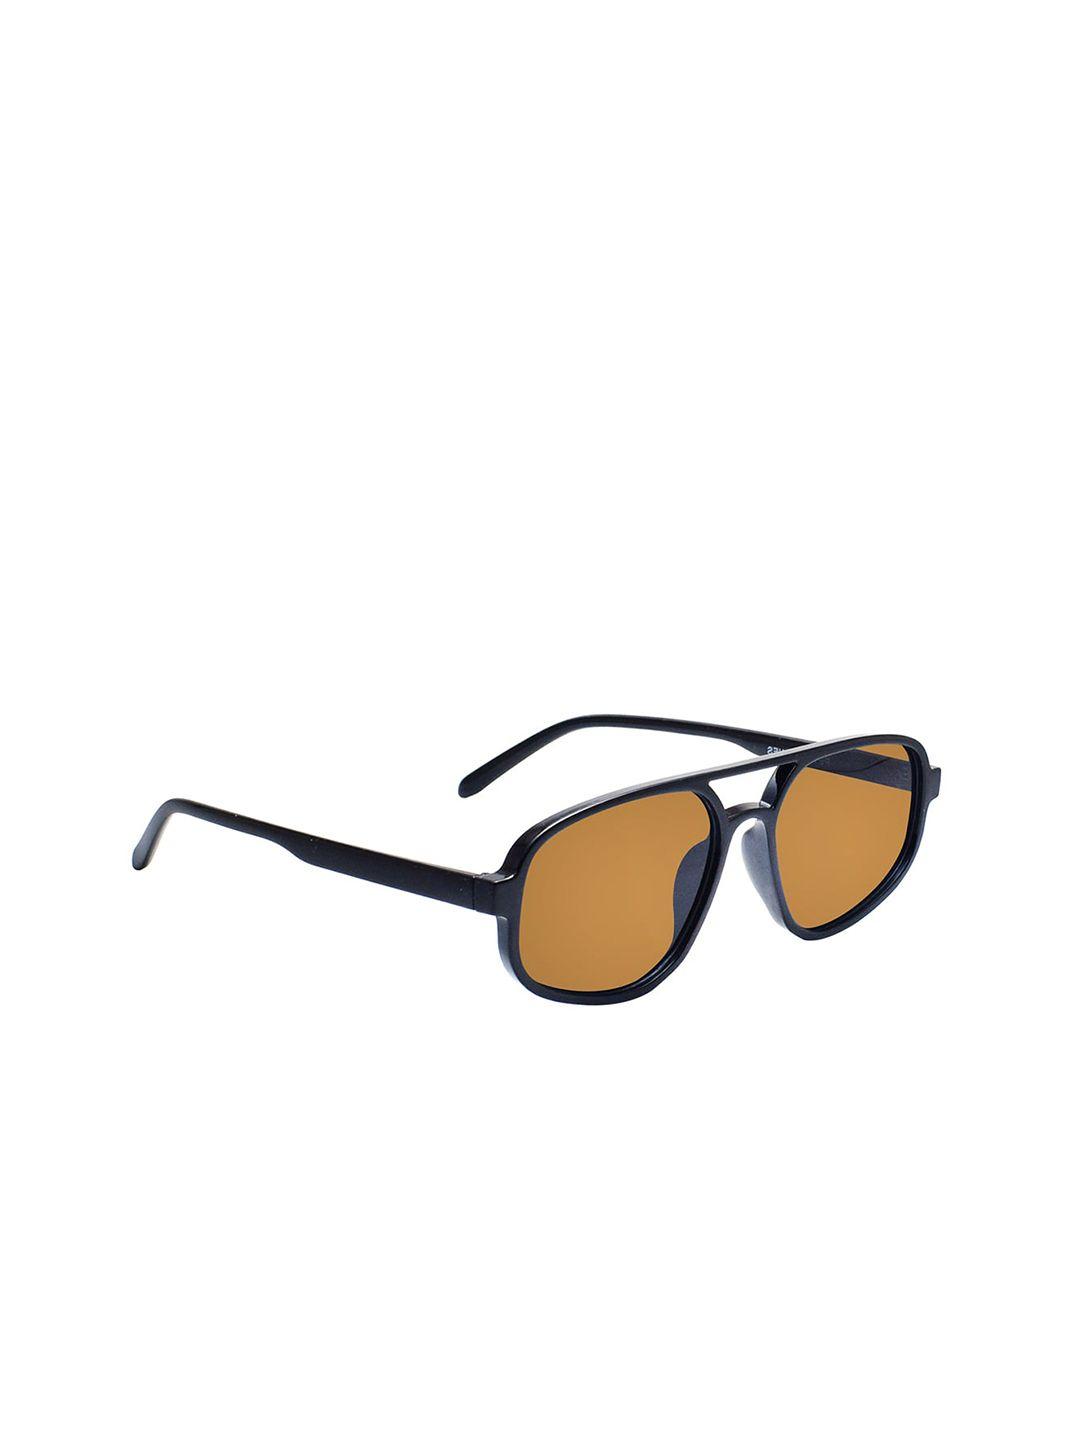 peter jones eyewear unisex aviator sunglasses with uv protected lens13050tb